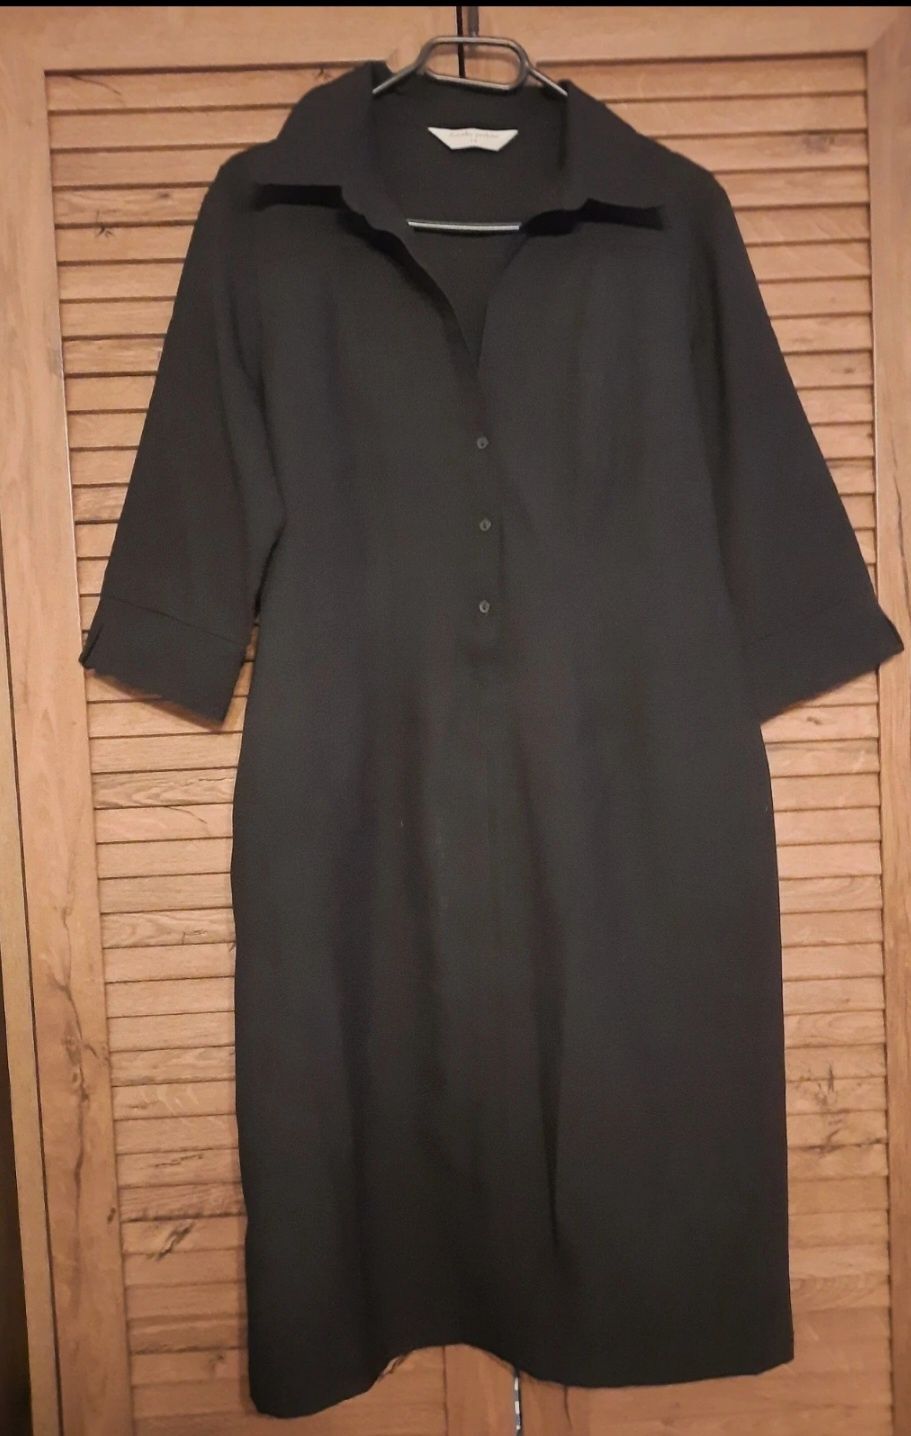 Sukienka czarna rozmiar 42